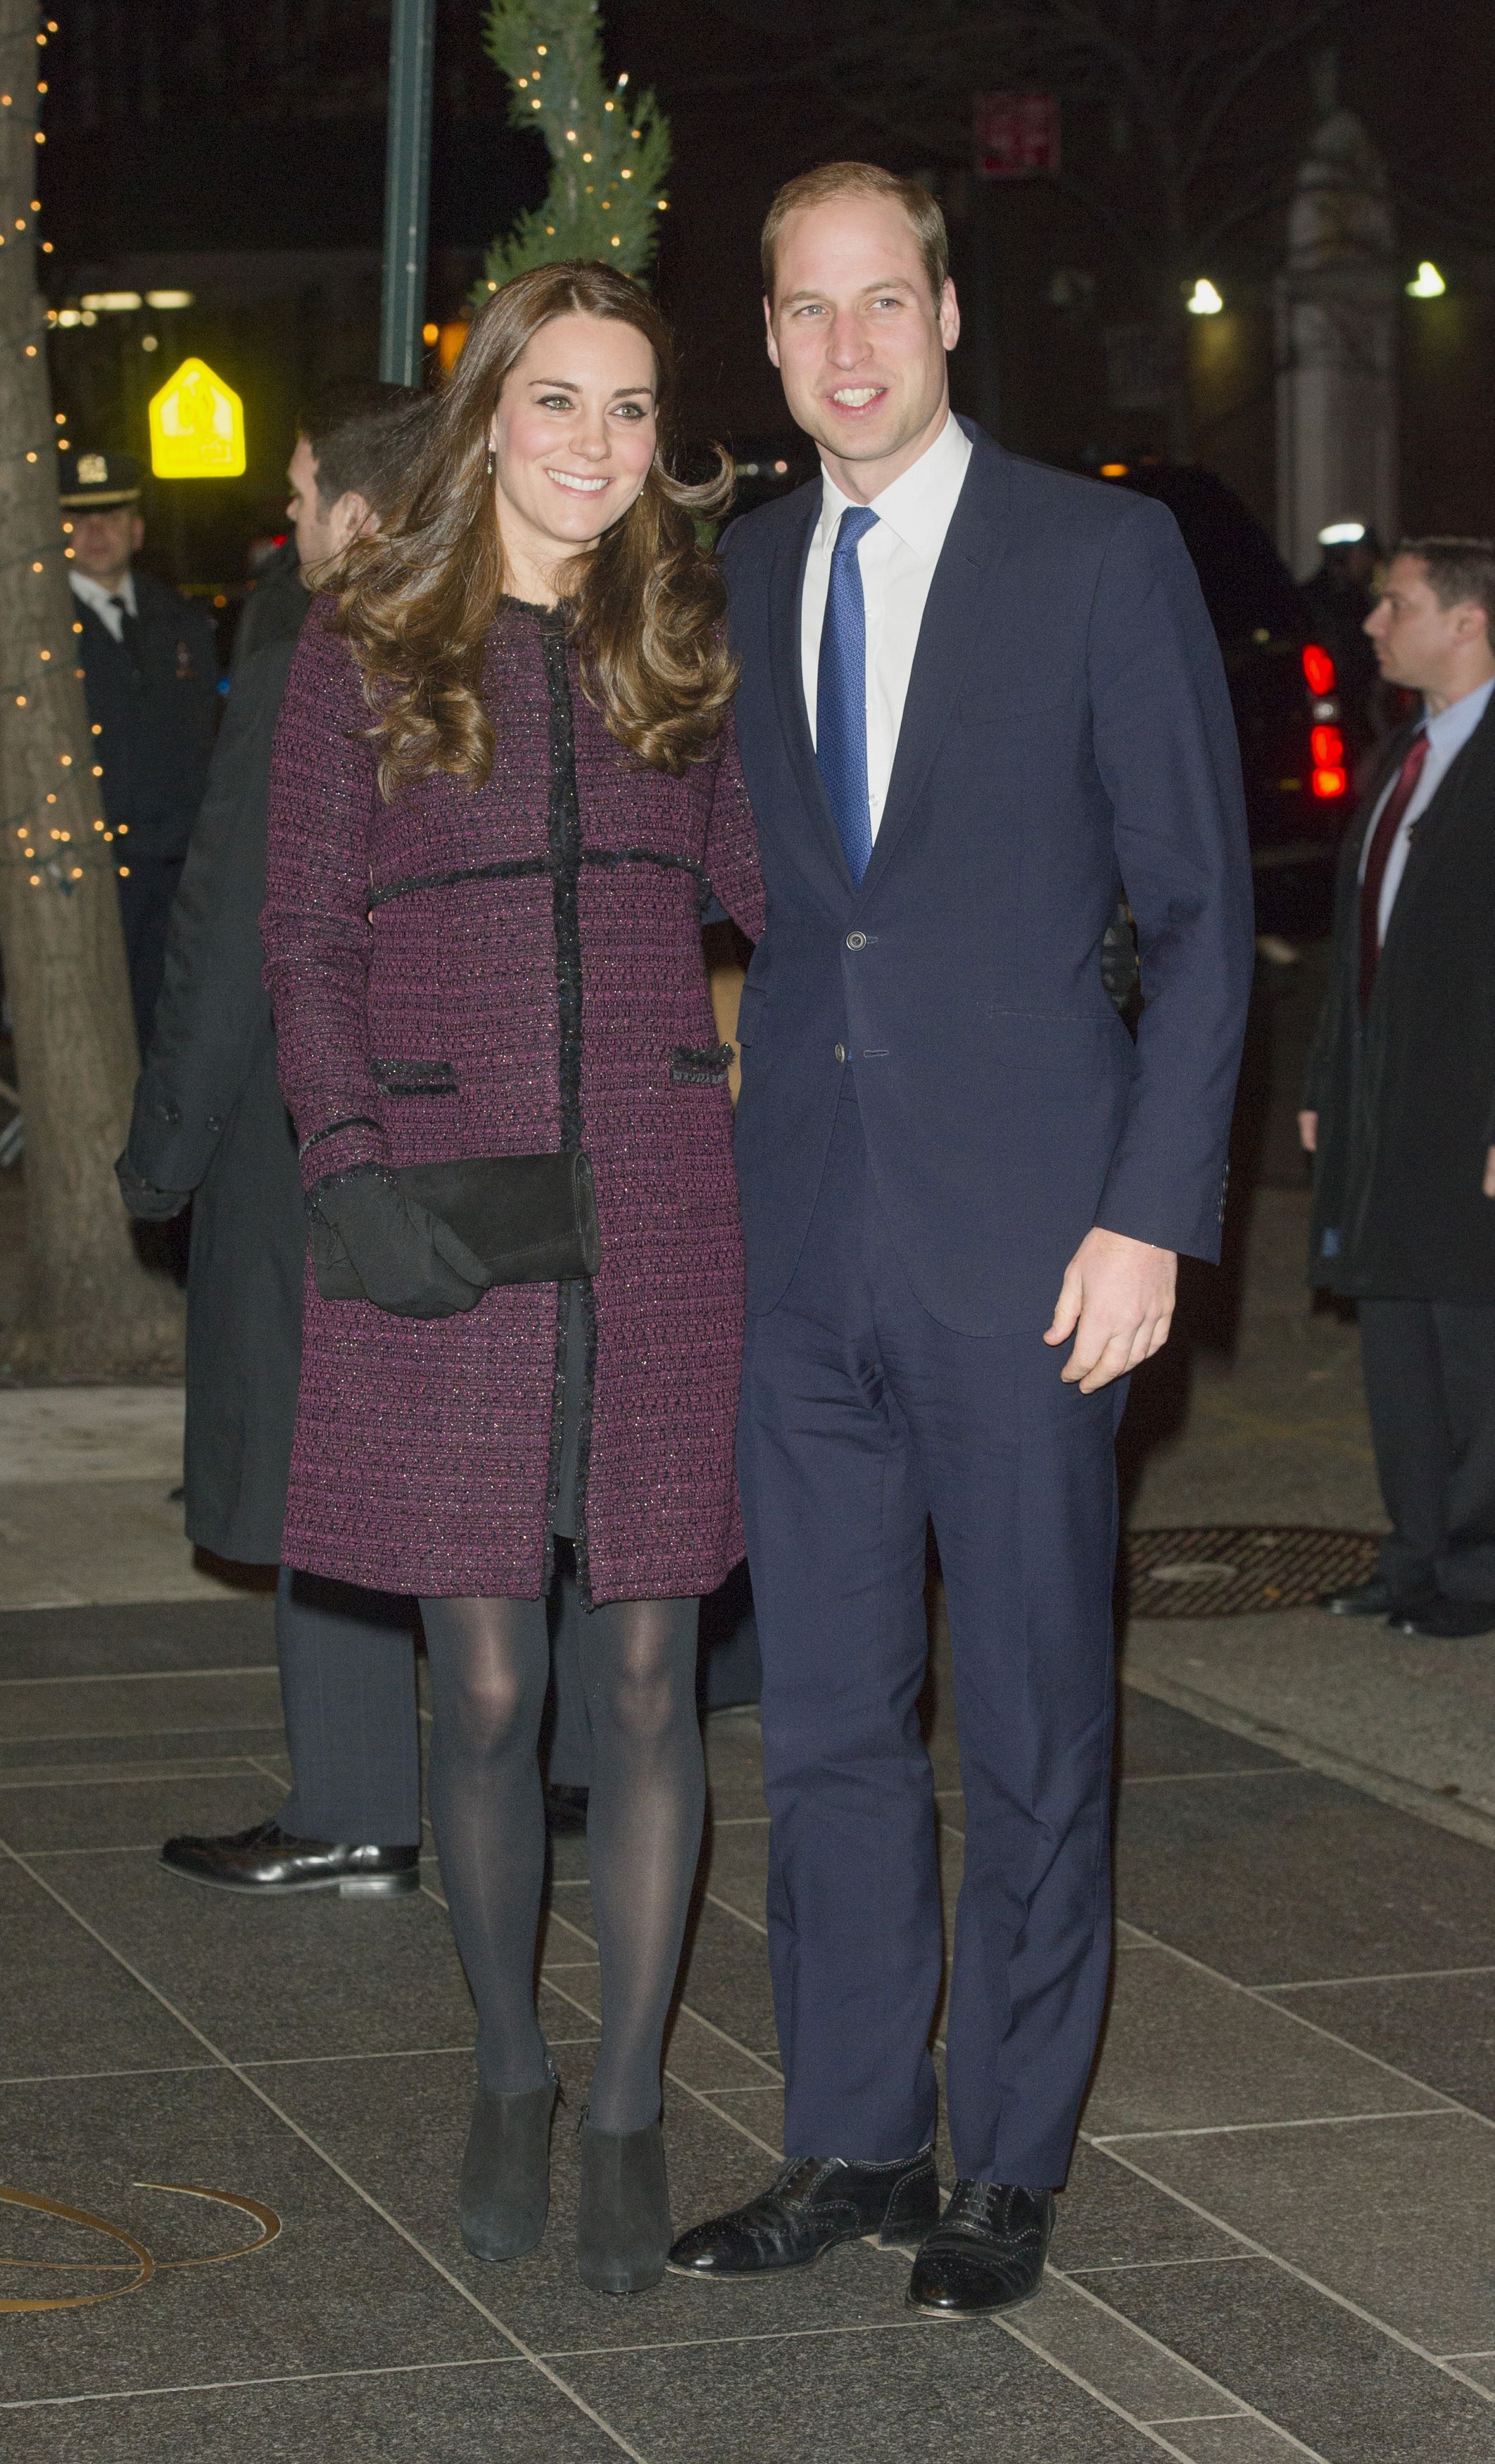 The Duke and Duchess of Cambridge in New York City